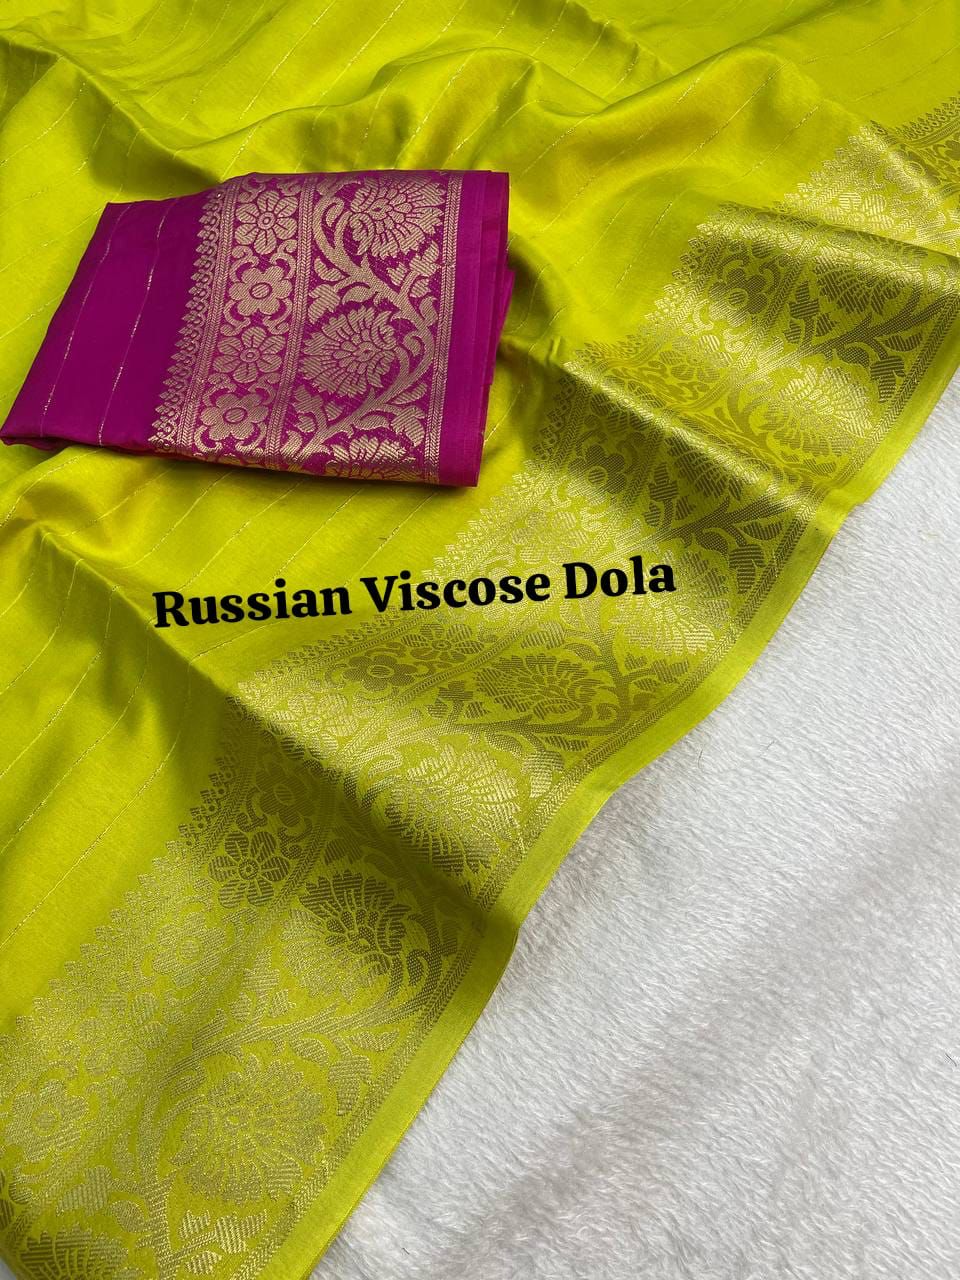 Pure Green Viscose Russian Dola Saree With Pallu And Jacquard Border